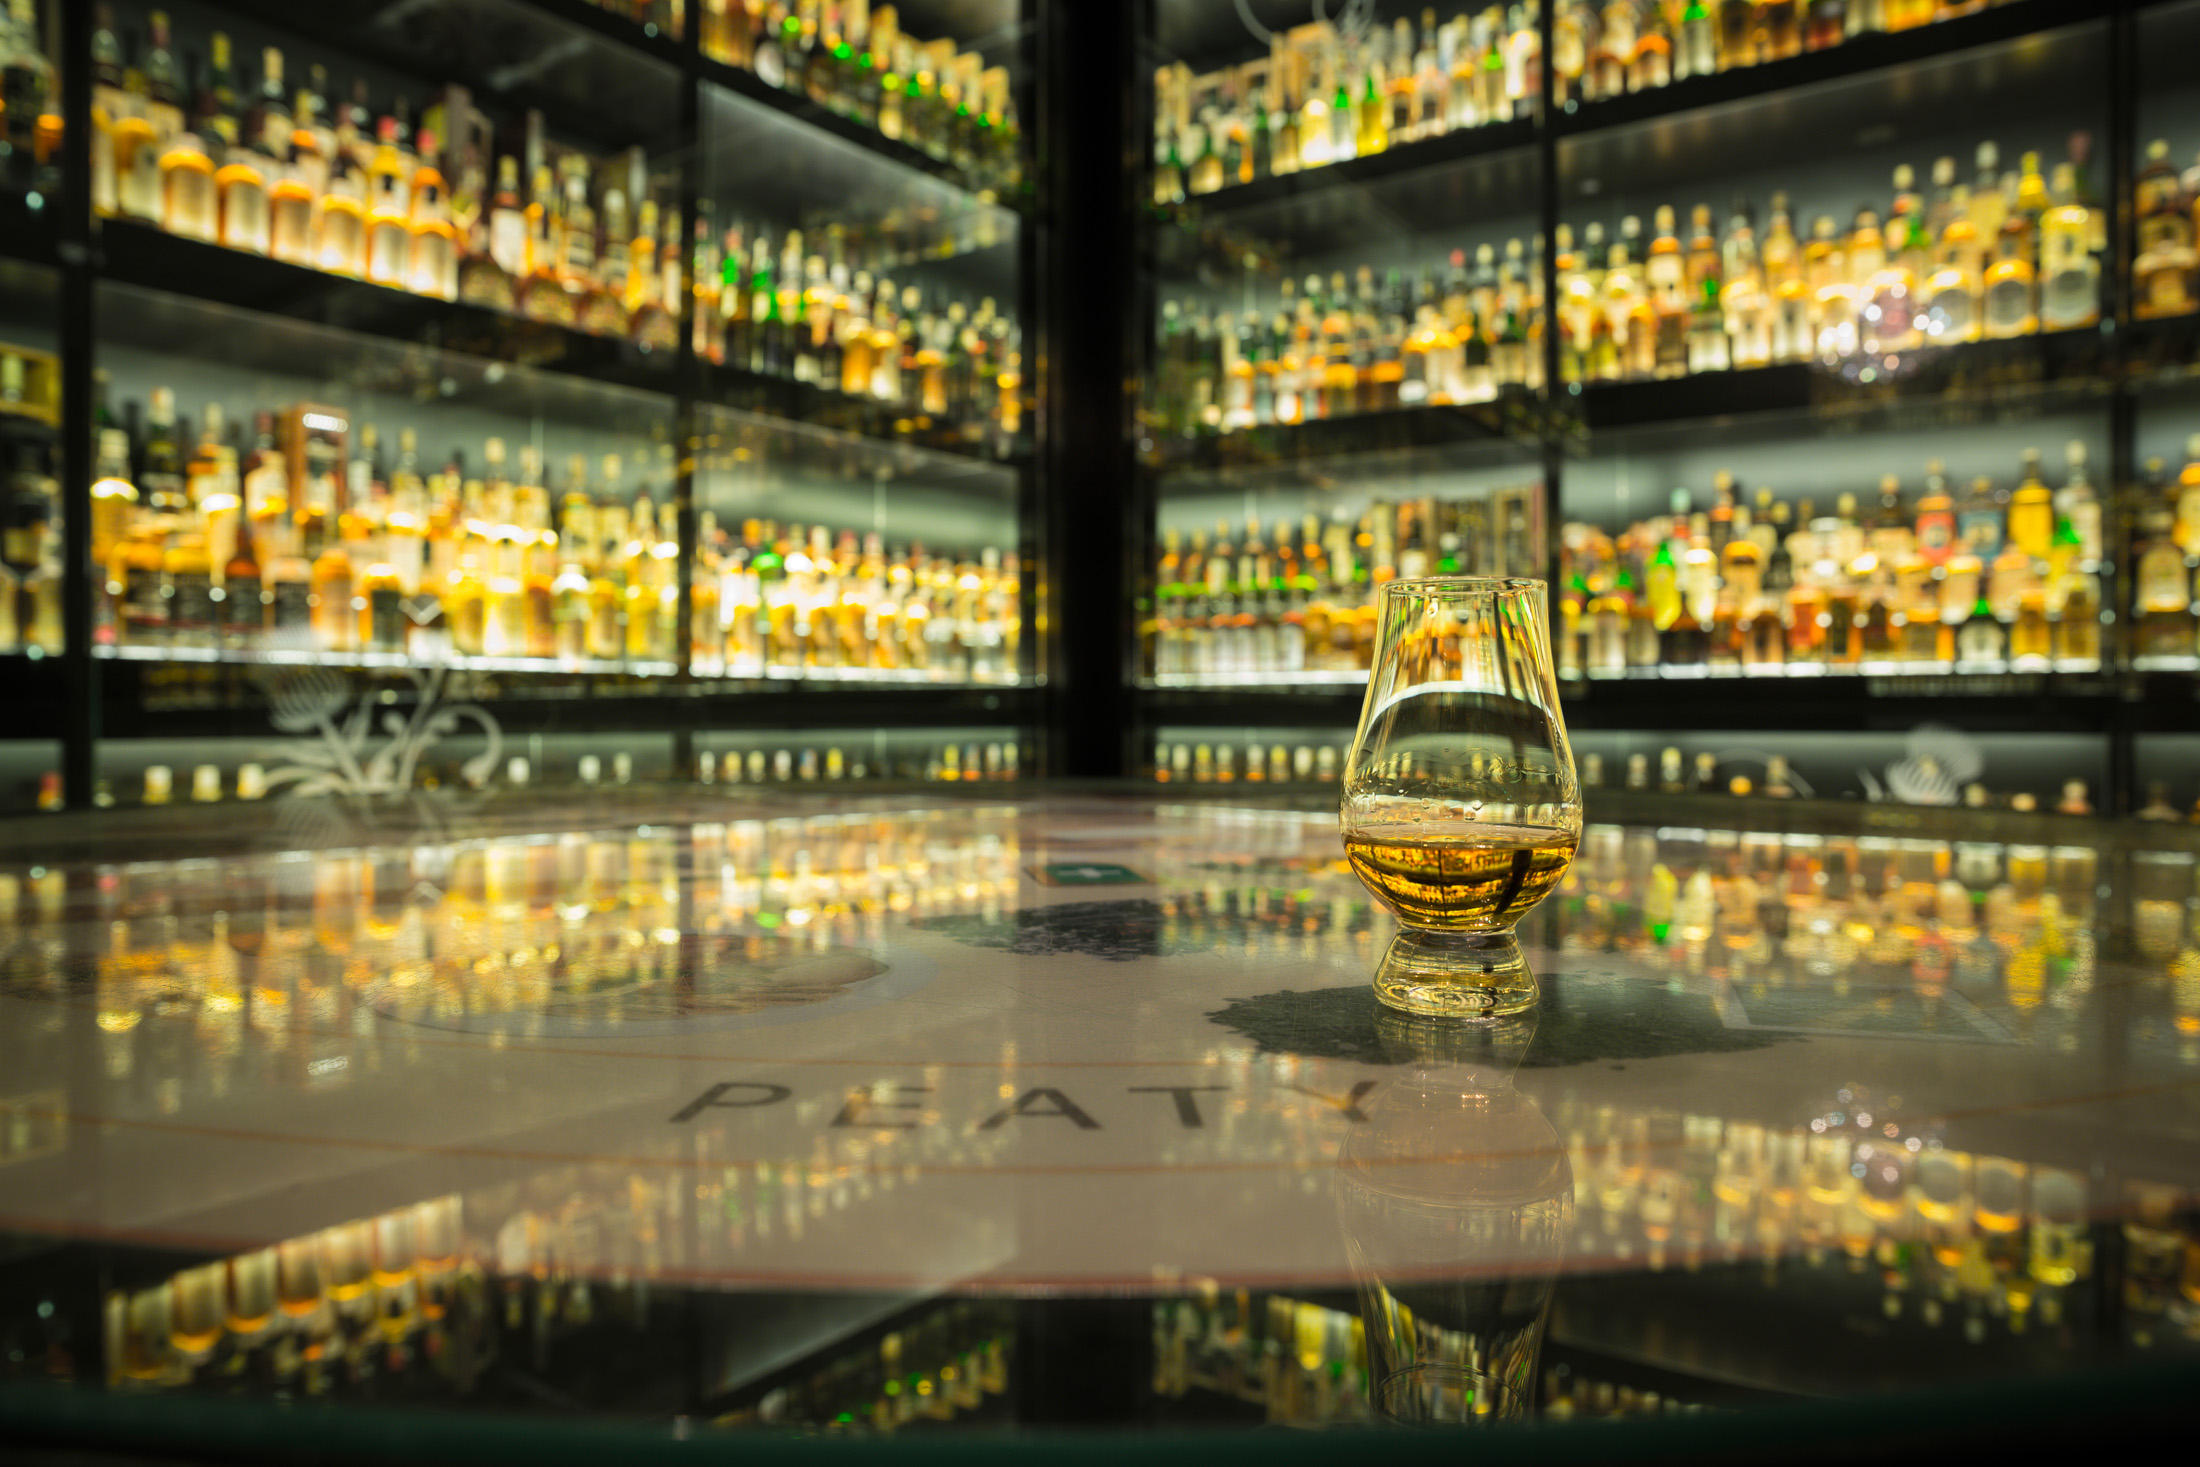 Edinburgh’s Scotch Whisky Experience